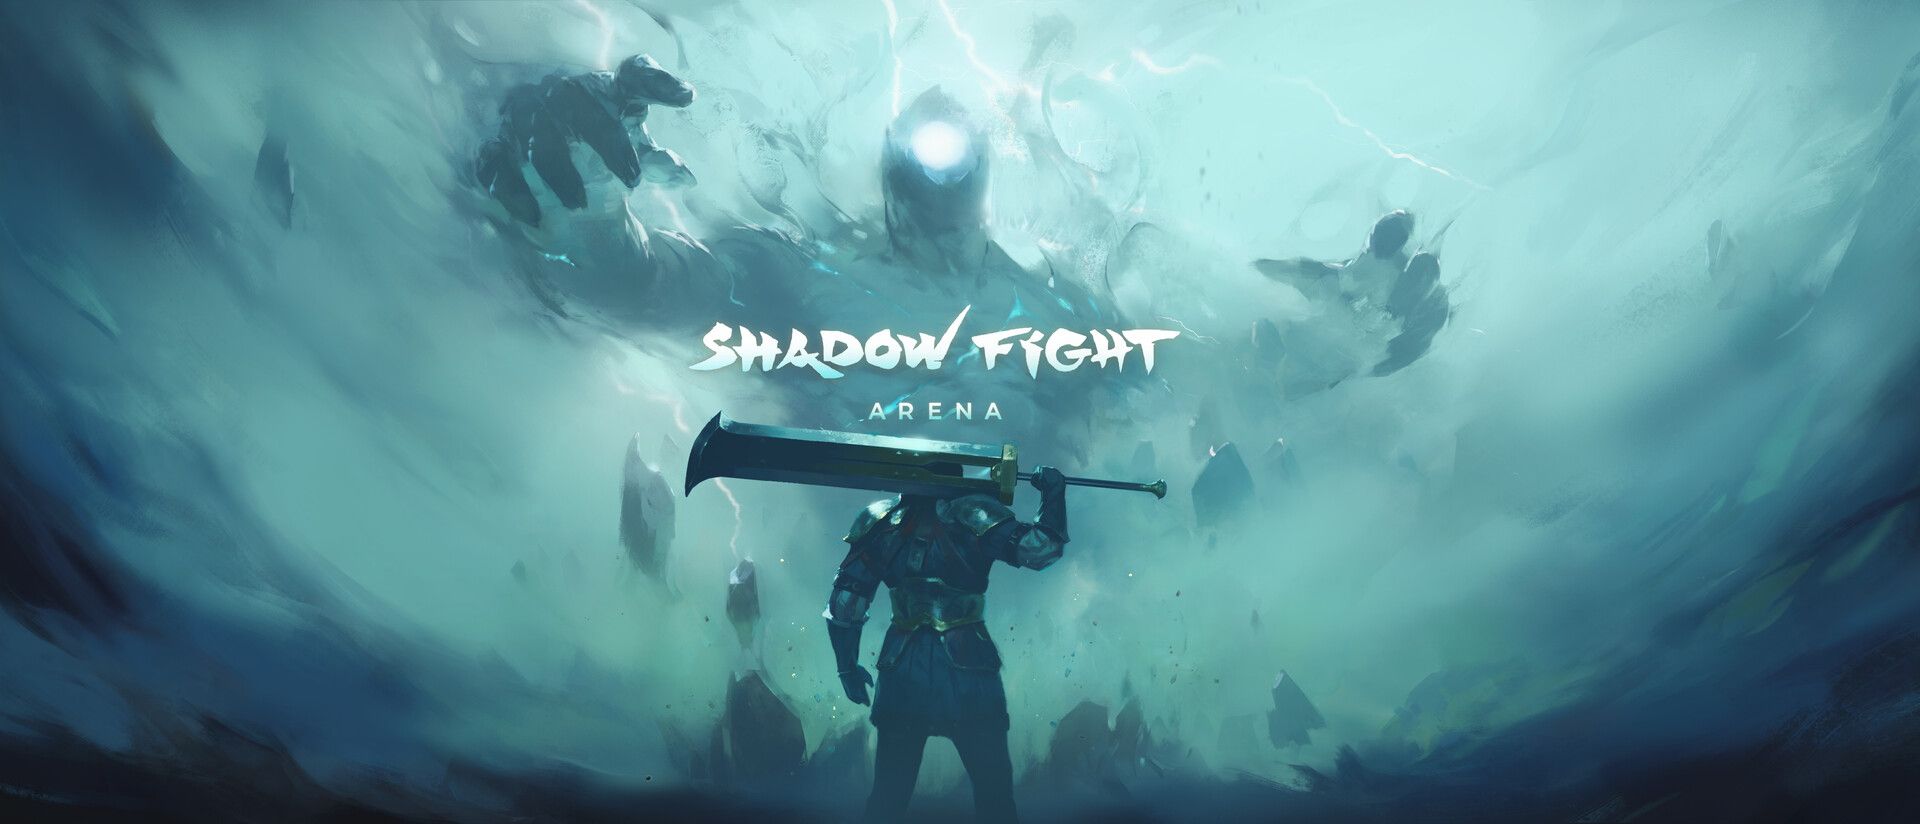 Shadow Fight Arena, Anna Krasova